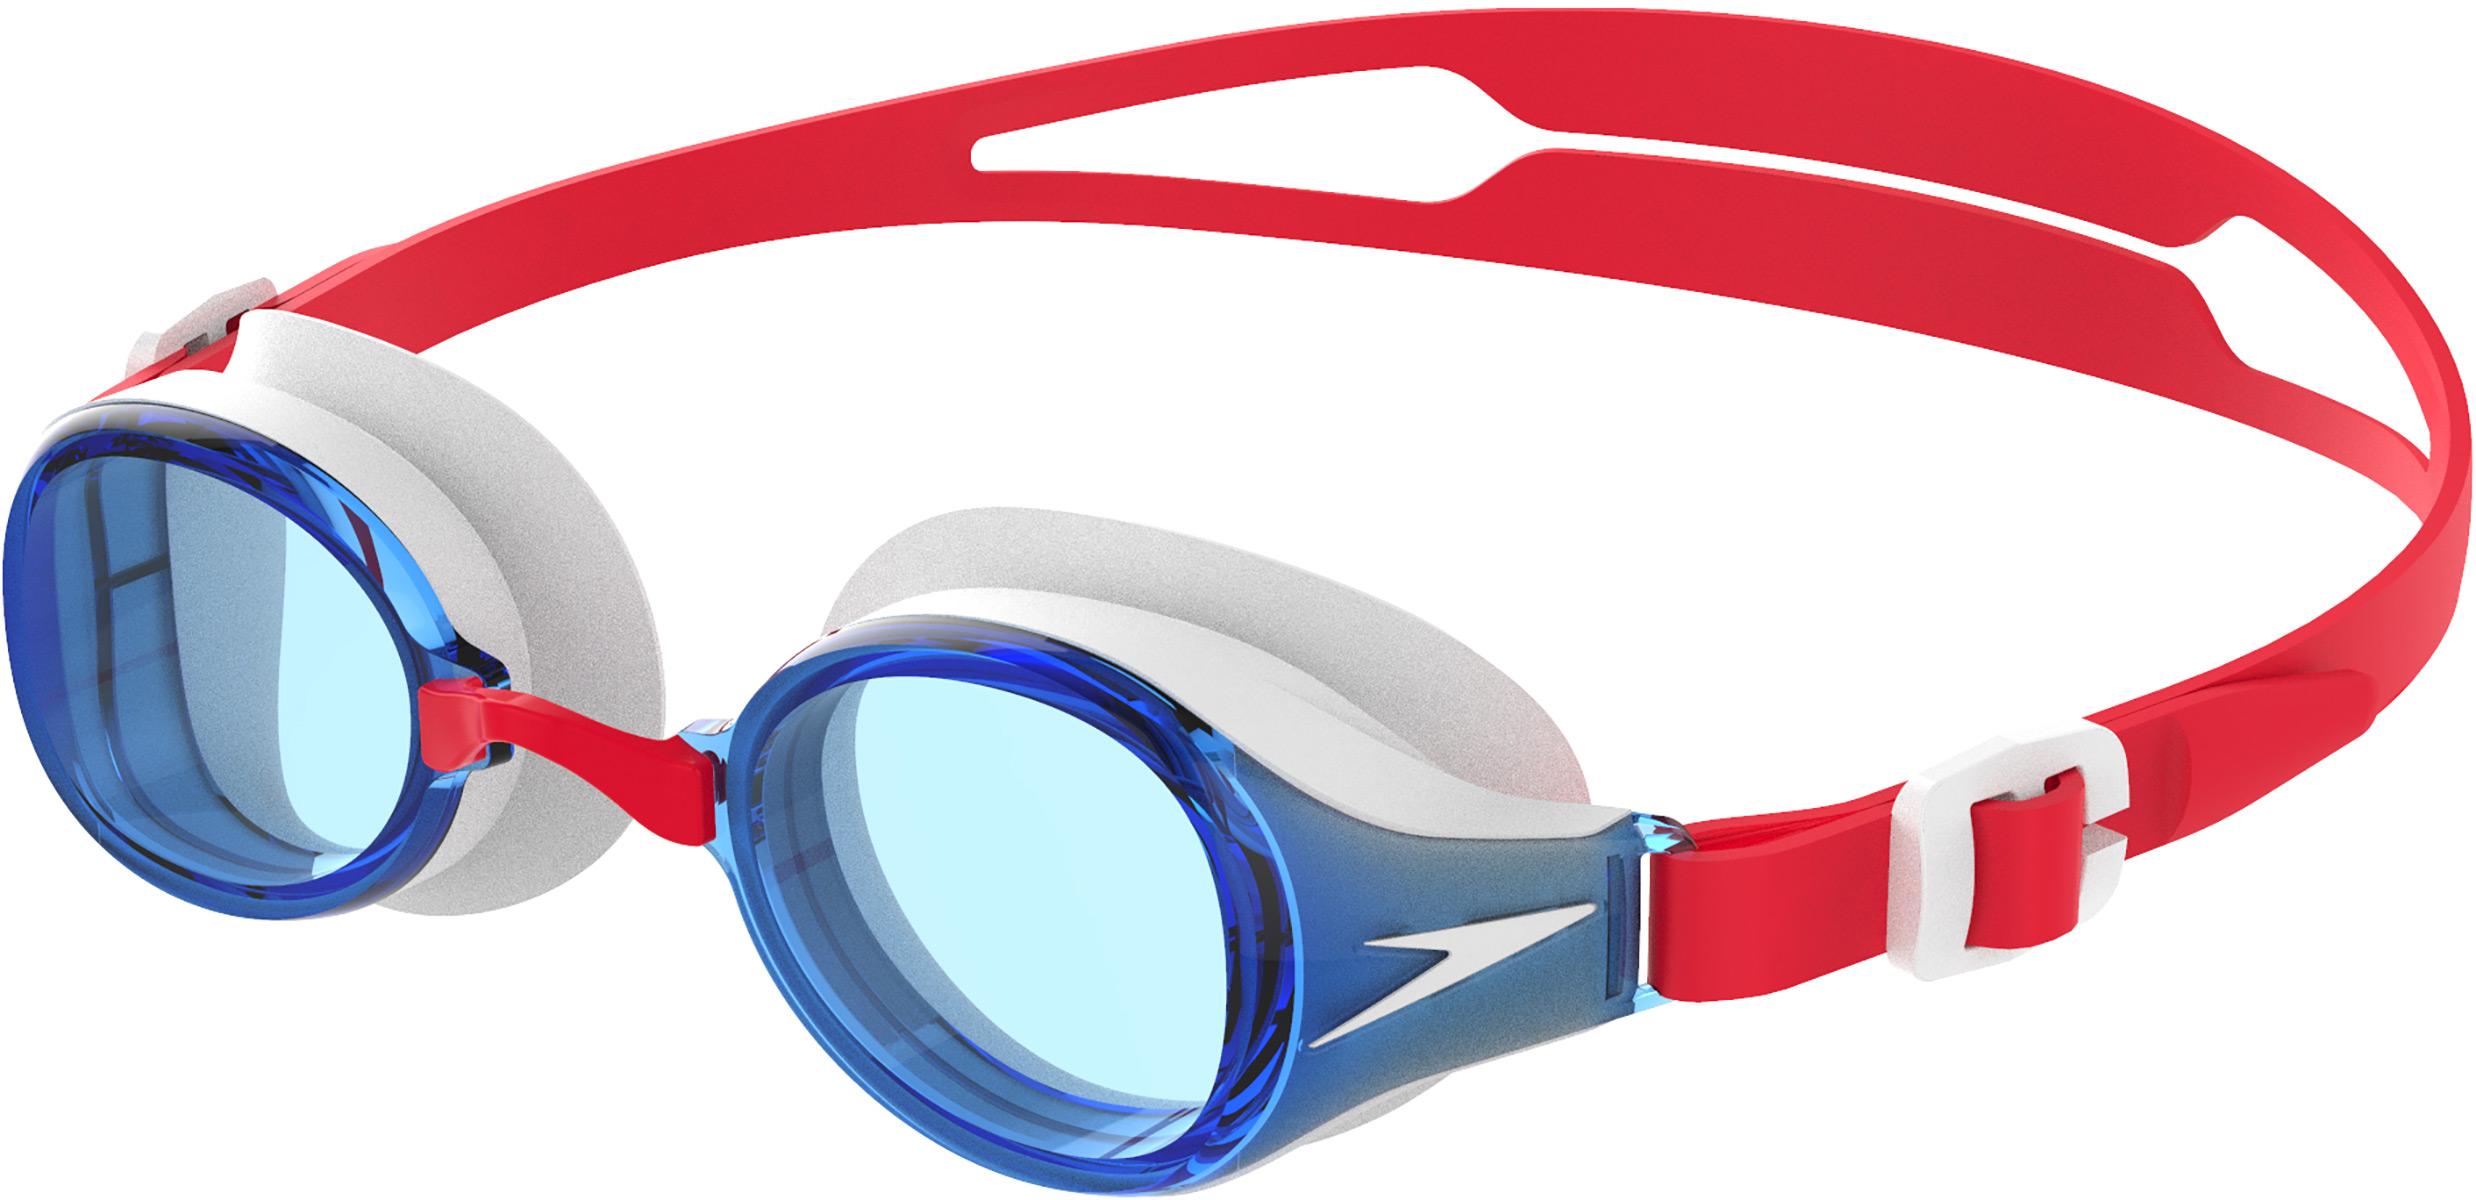 Speedo Hydropure Junior Goggles - Red/white/blue